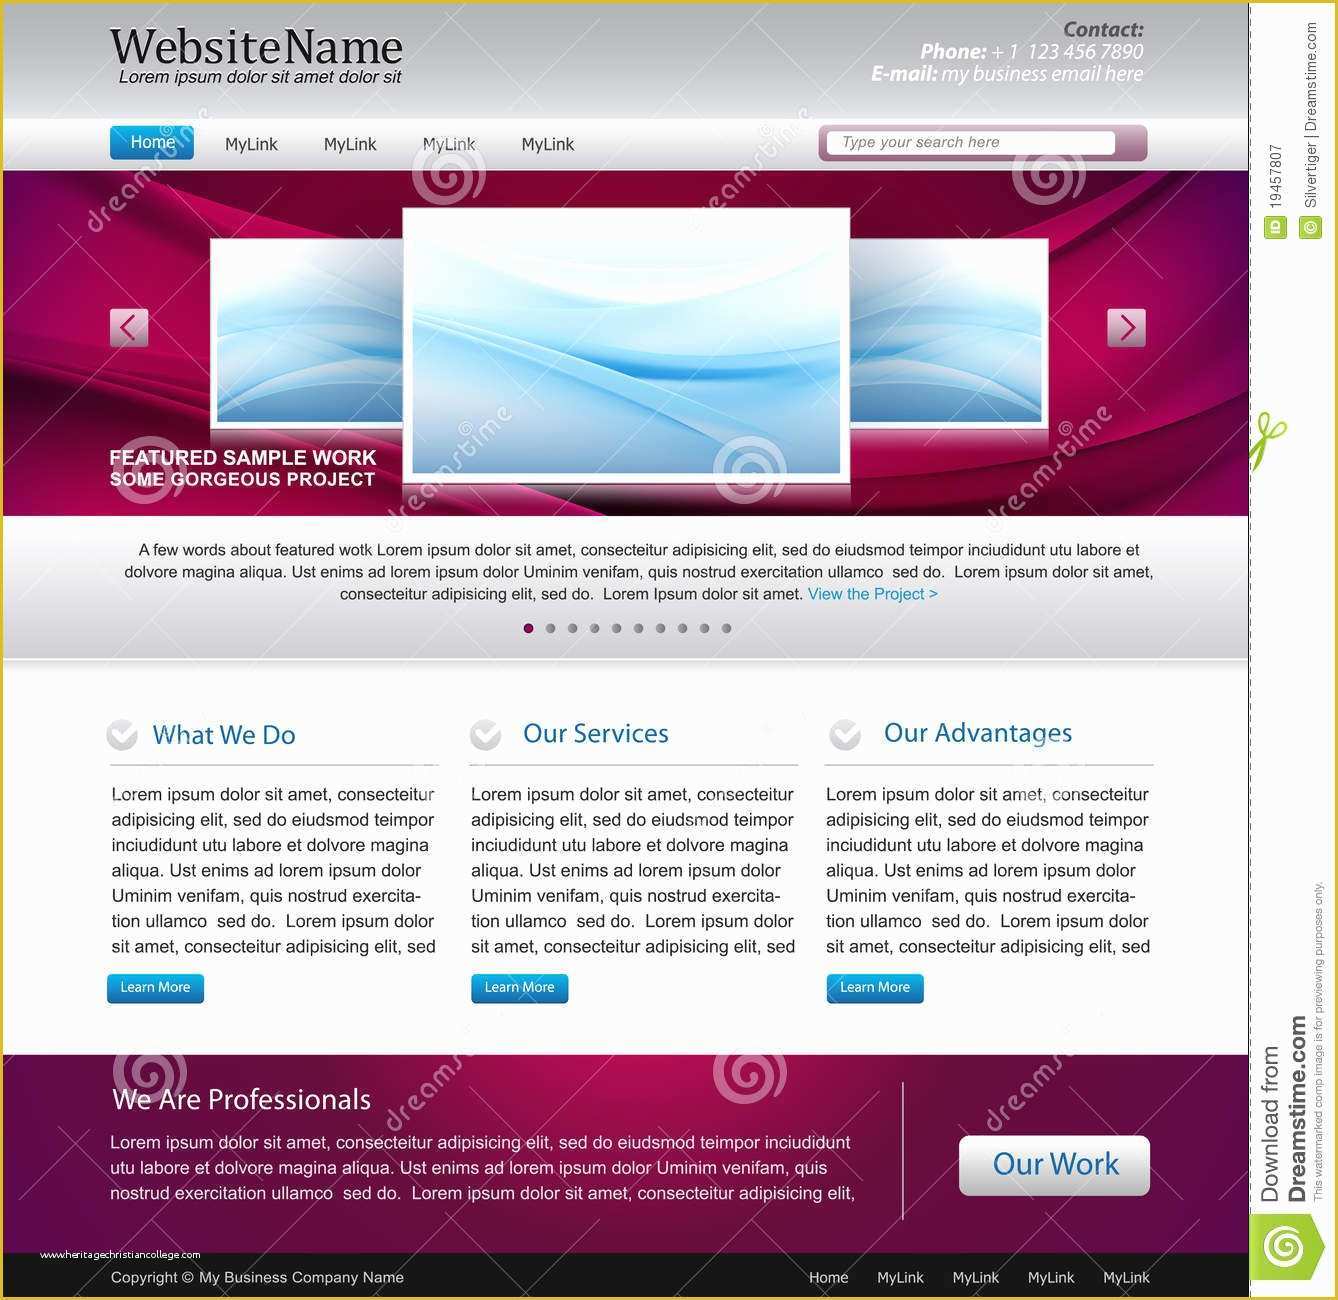 Copyright Free Website Templates Of Purple Website Design Template Stock Vector Illustration